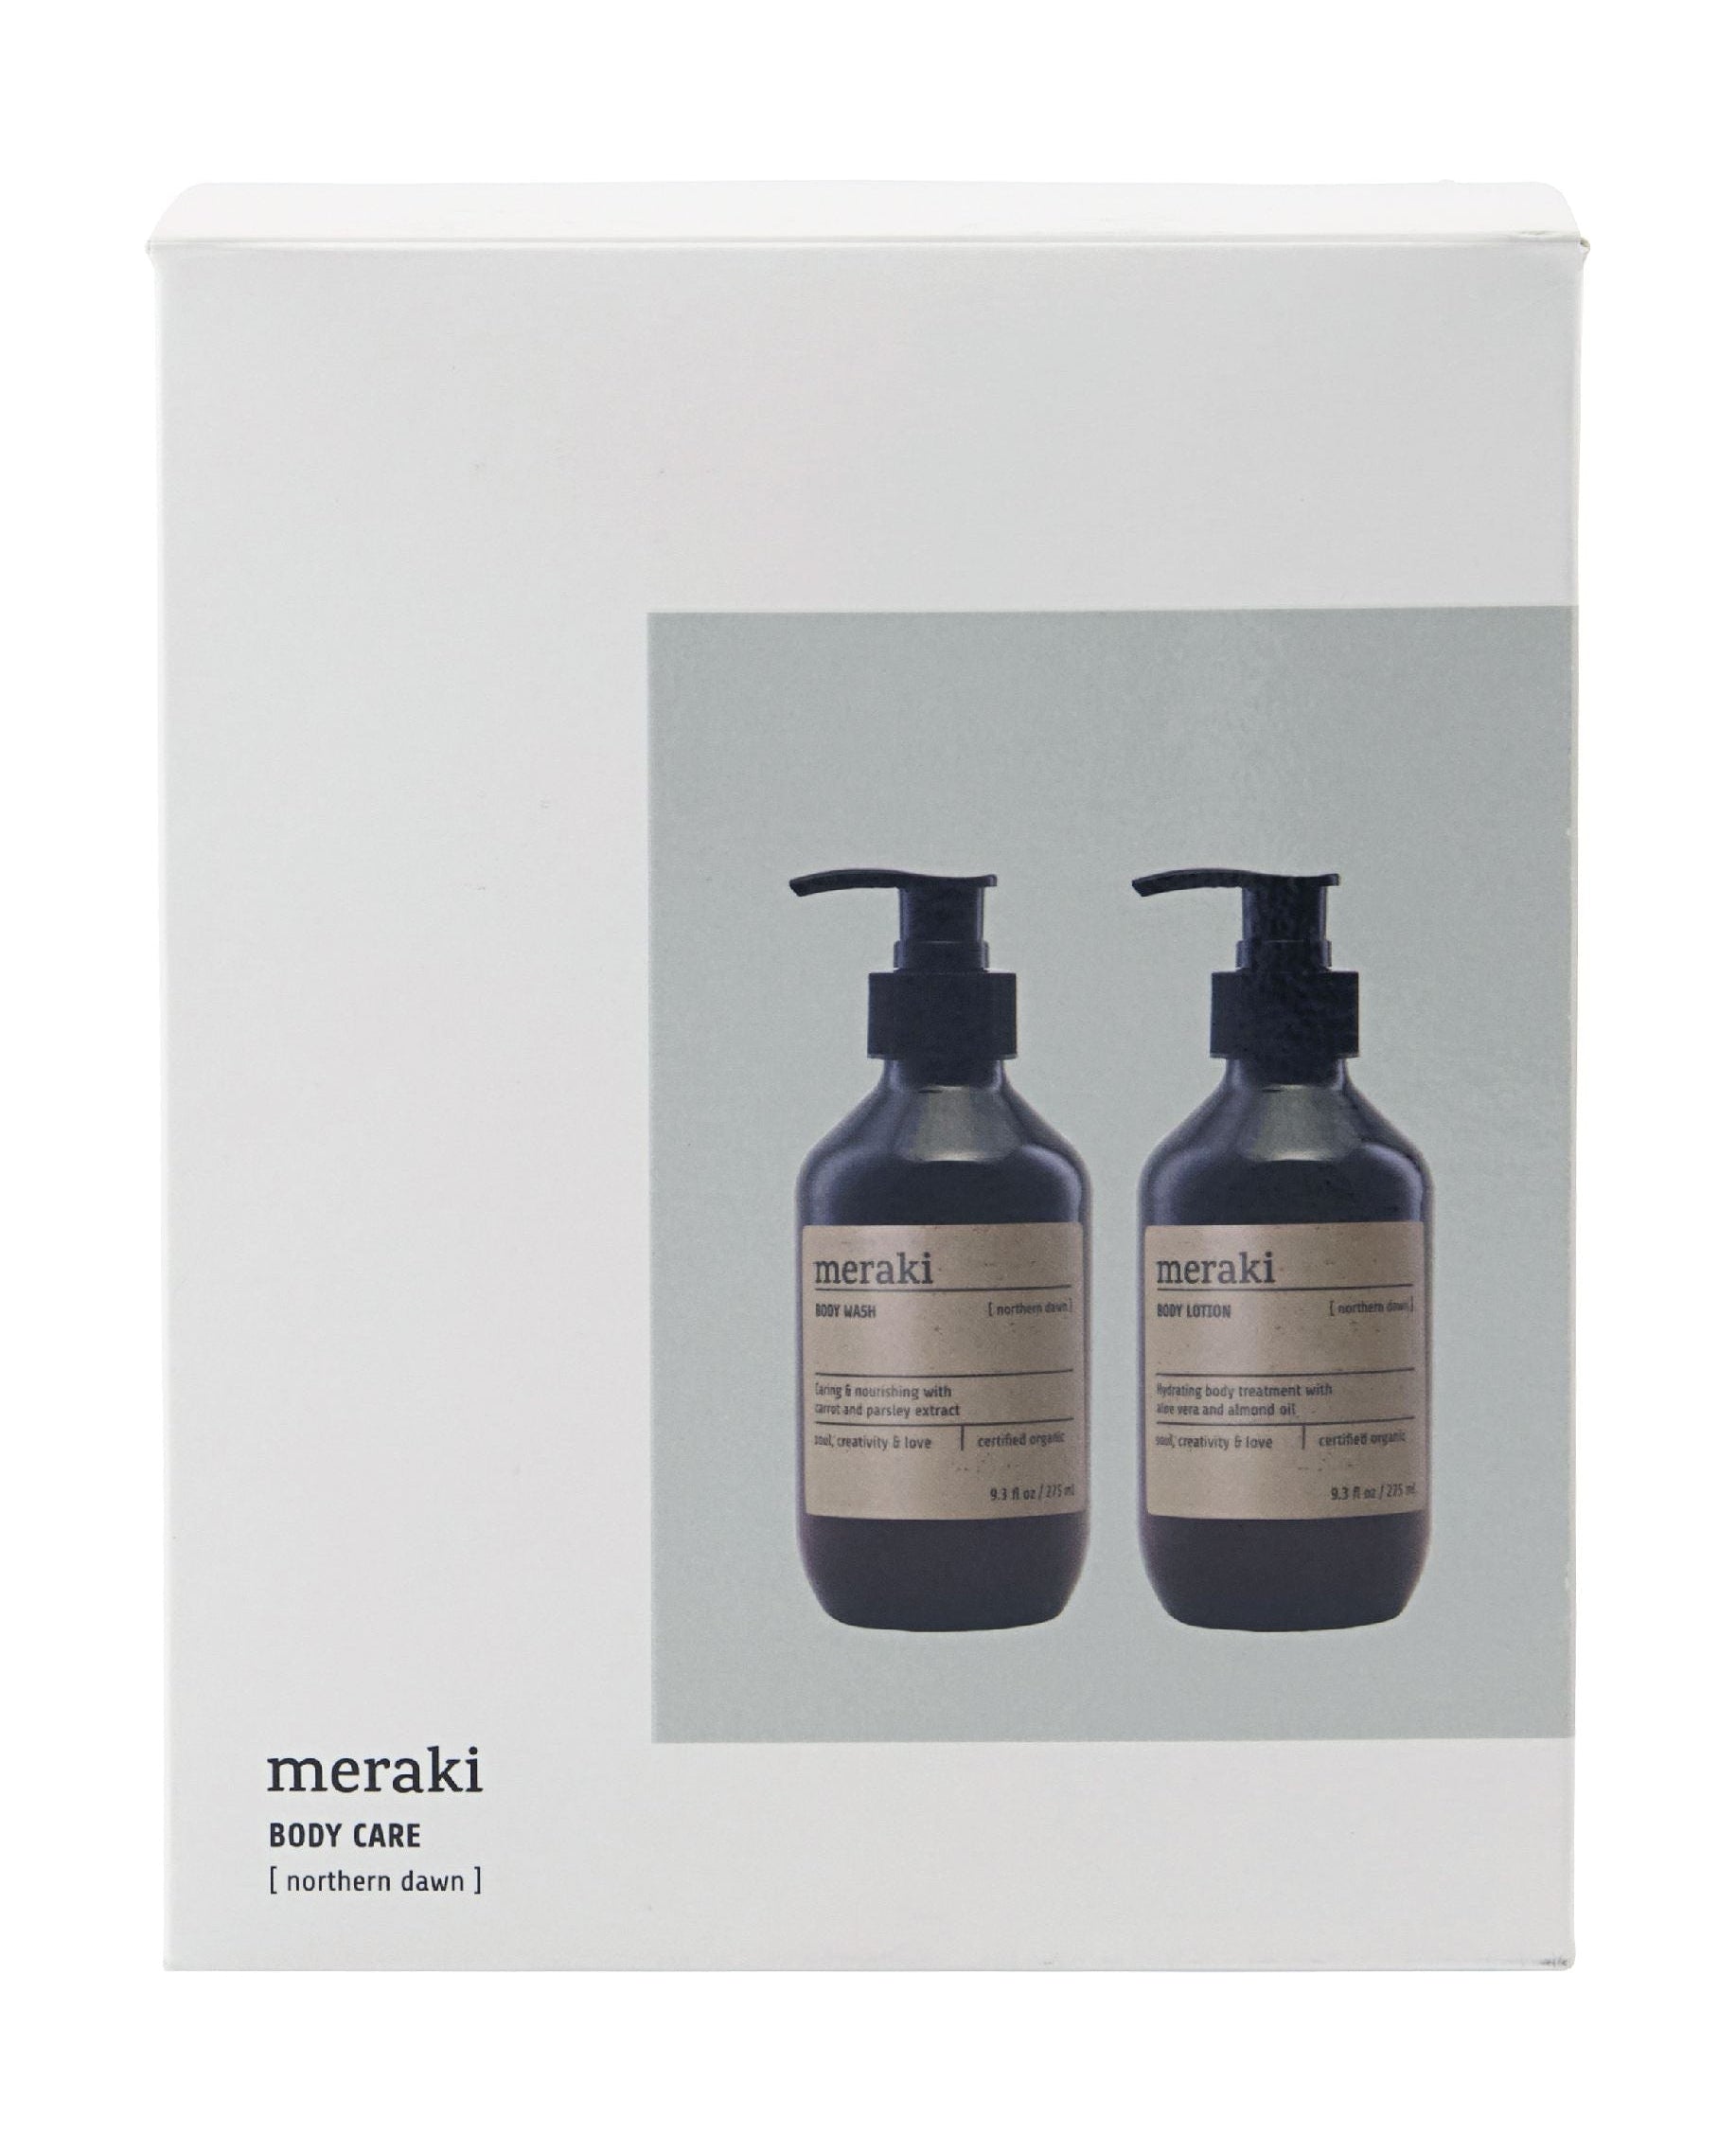 Meraki Body Care Gift Box 275/275 ml, Noord -Dawn